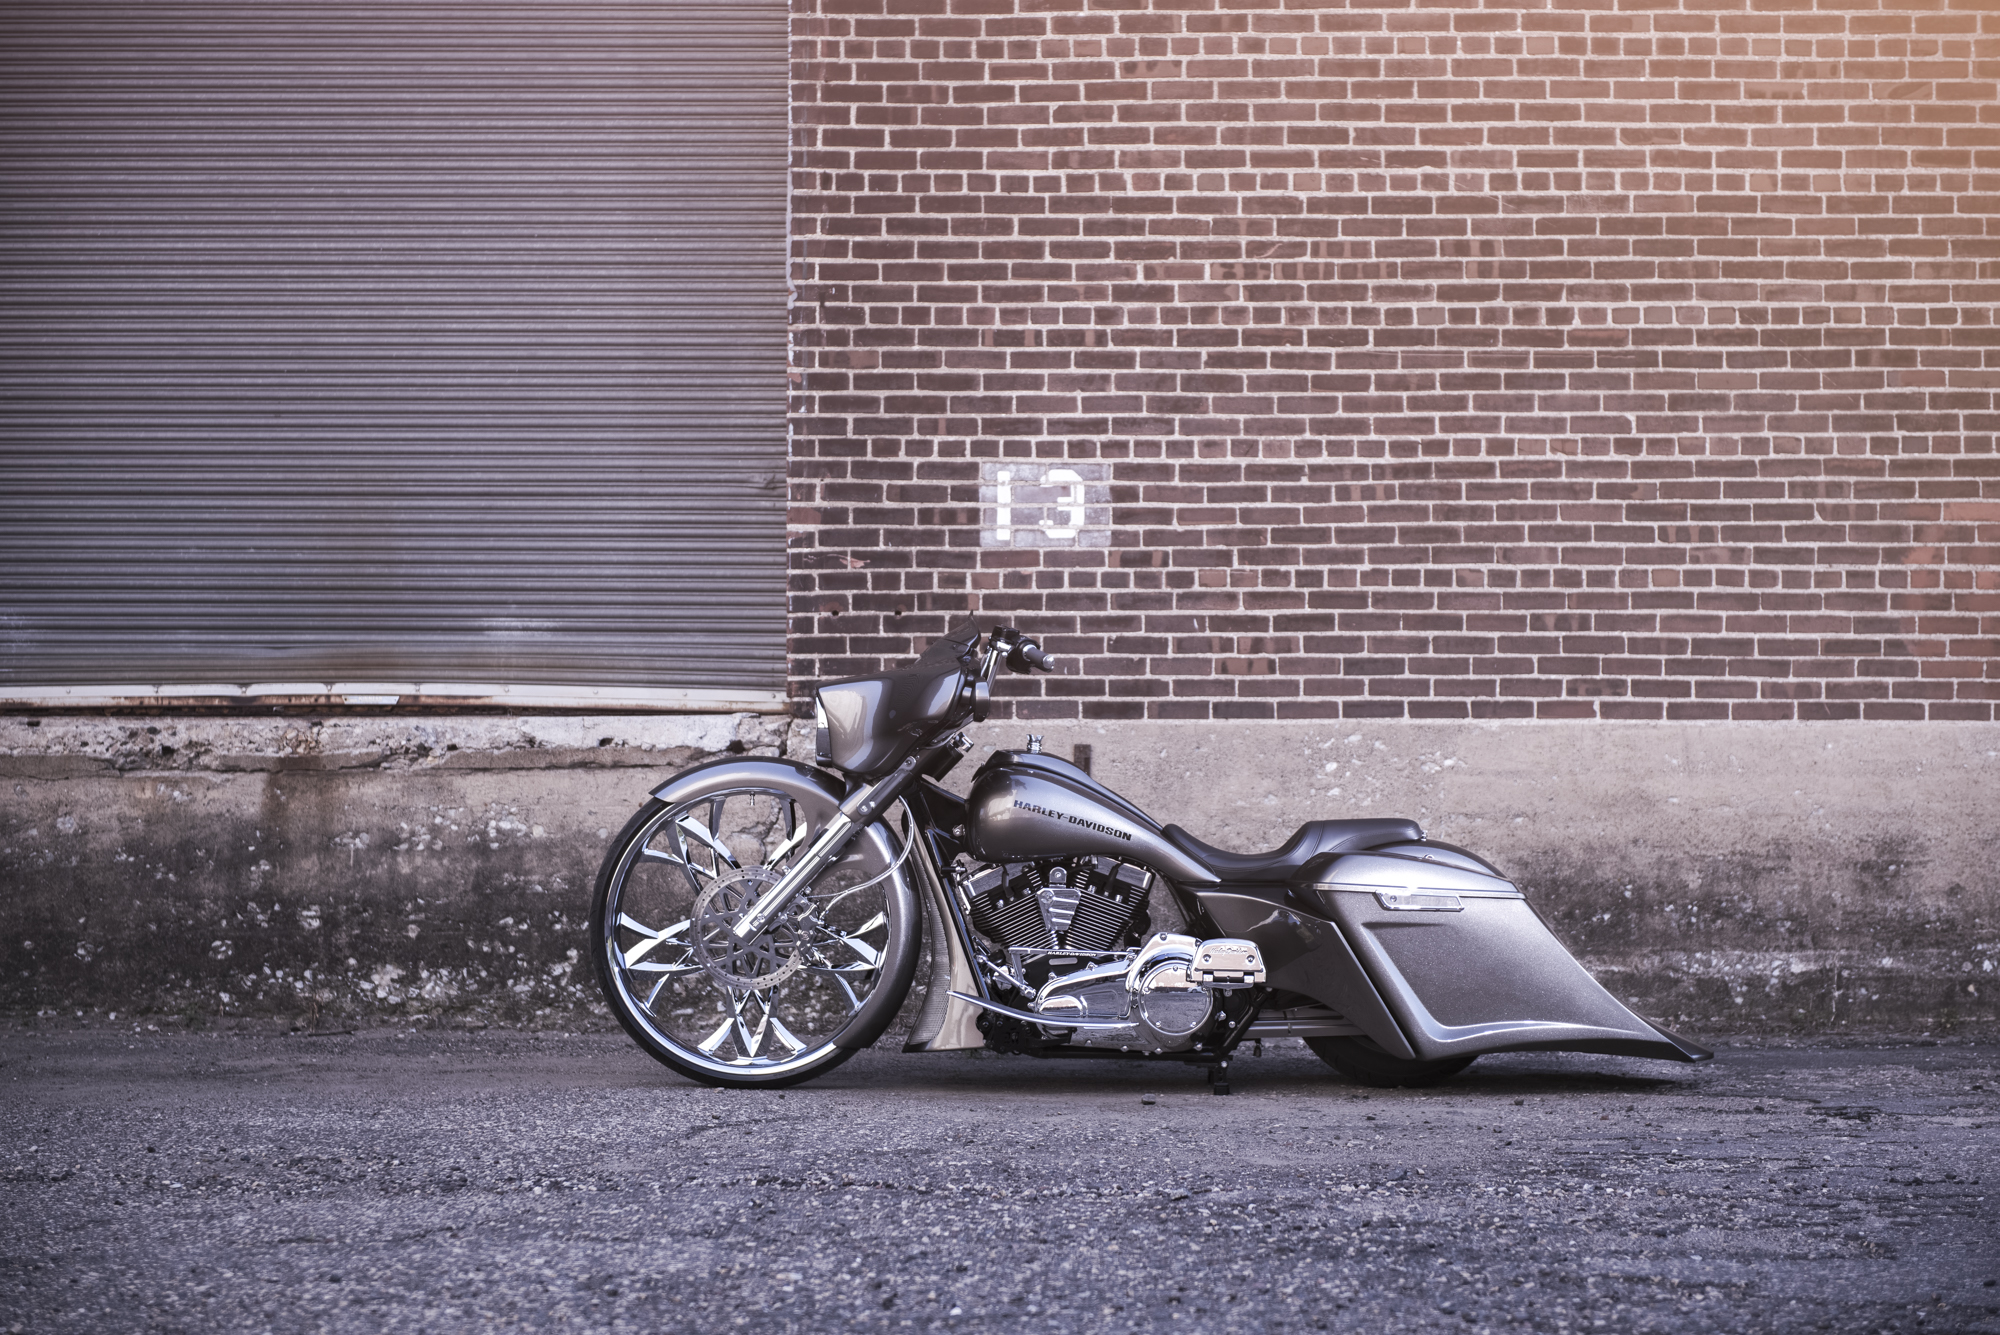 Minnesota Motorcycle Photography